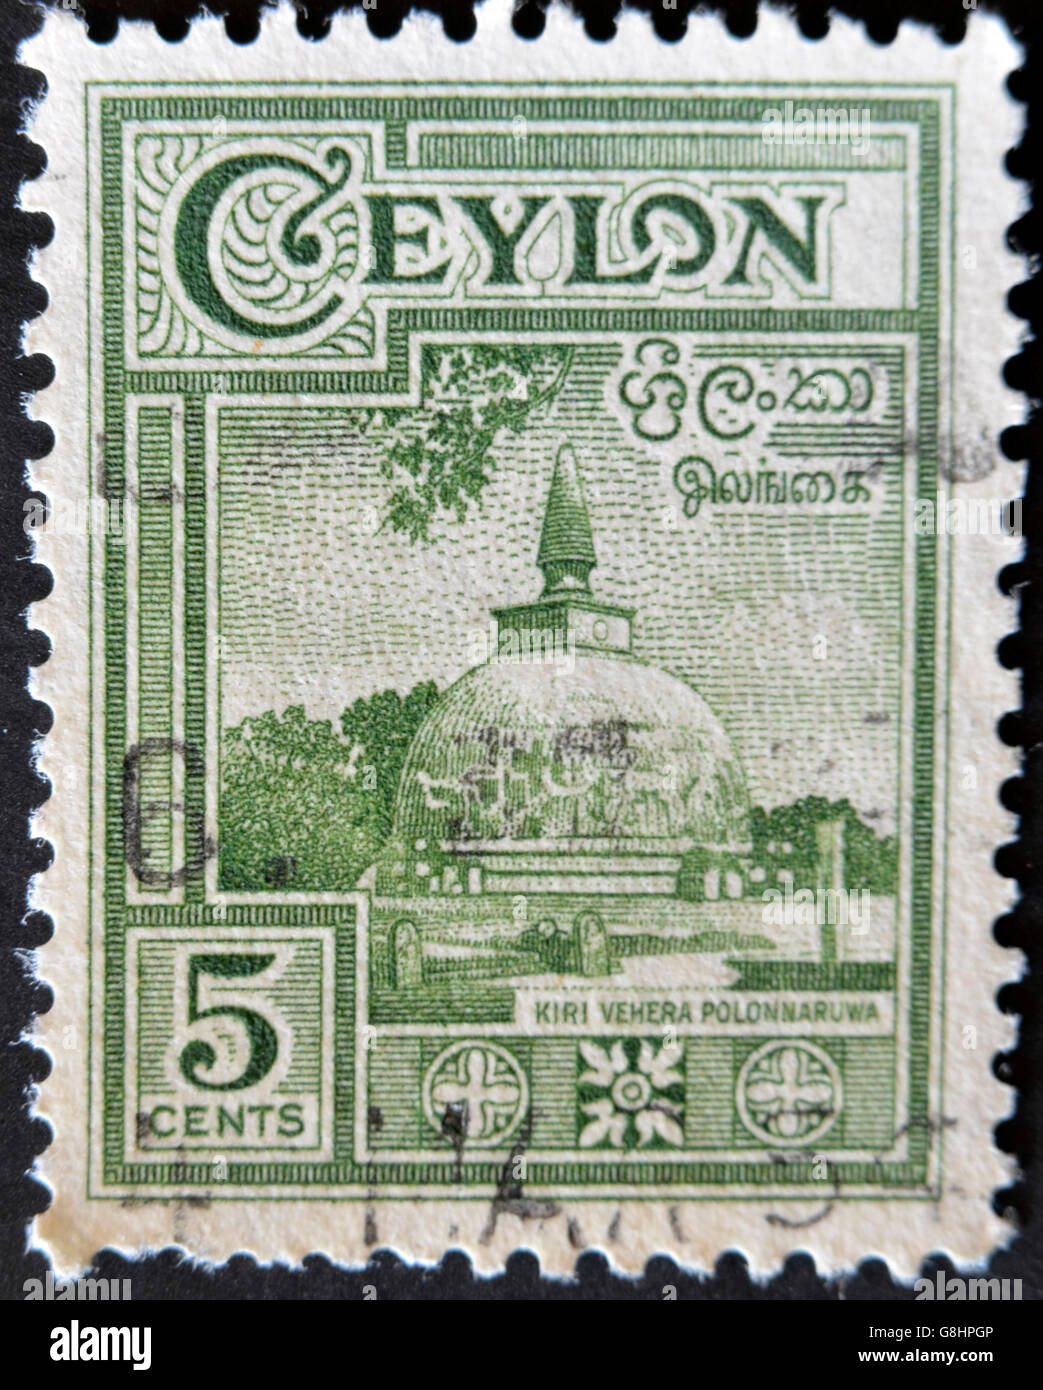 CEYLON - CIRCA 1957: A stamp printed in Ceylon (now Sri Lanka) shows image of Kihiri Vehera, an ancient stupa in Kataragama,  ci Stock Photo